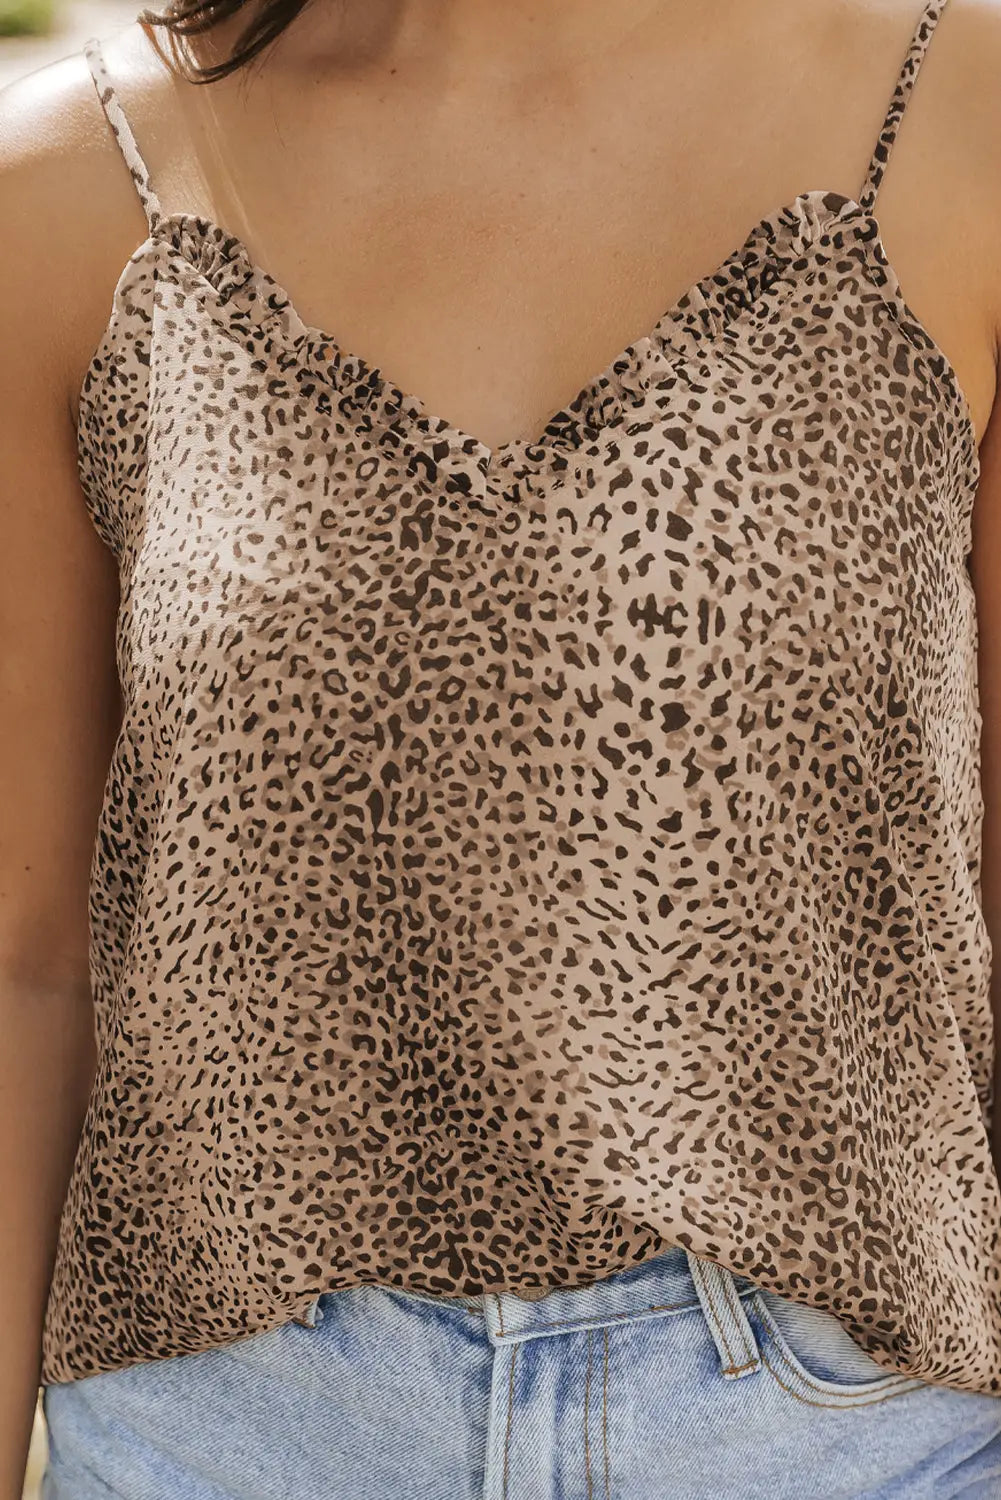 Leopard cheetah print shift tank - tops